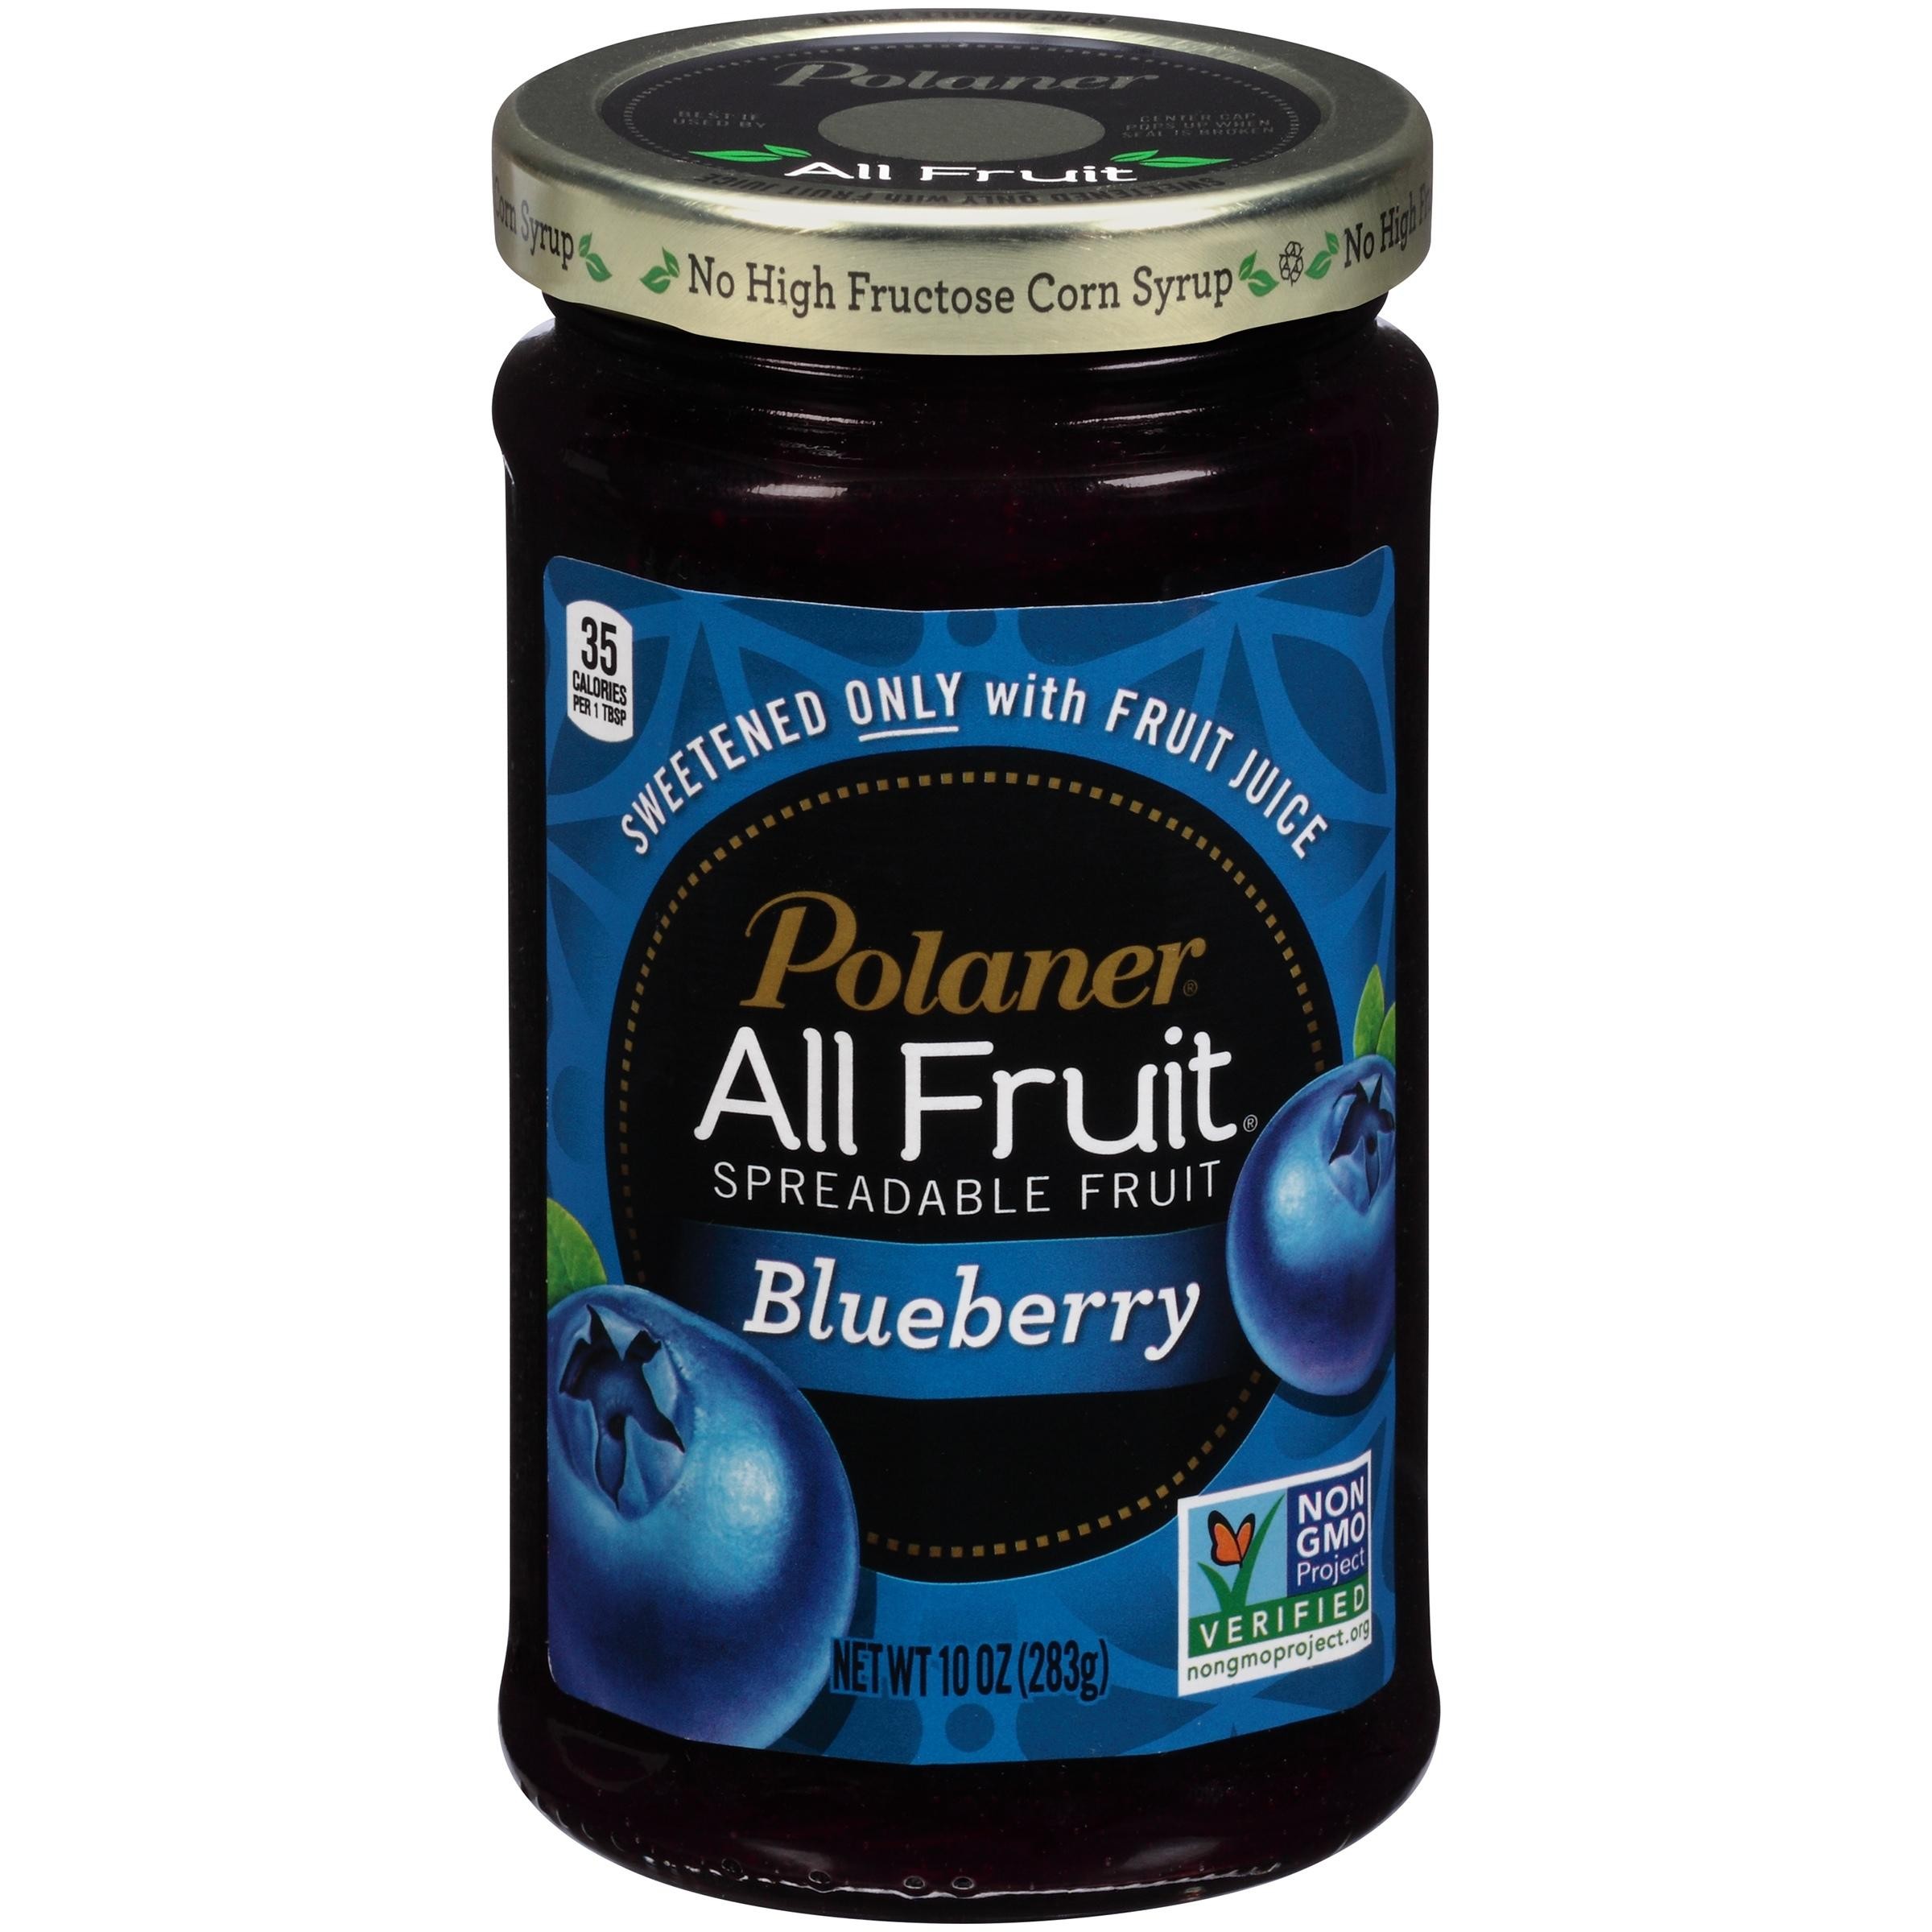 Polaner, All Fruit, Spreadable Fruit, Blueberry